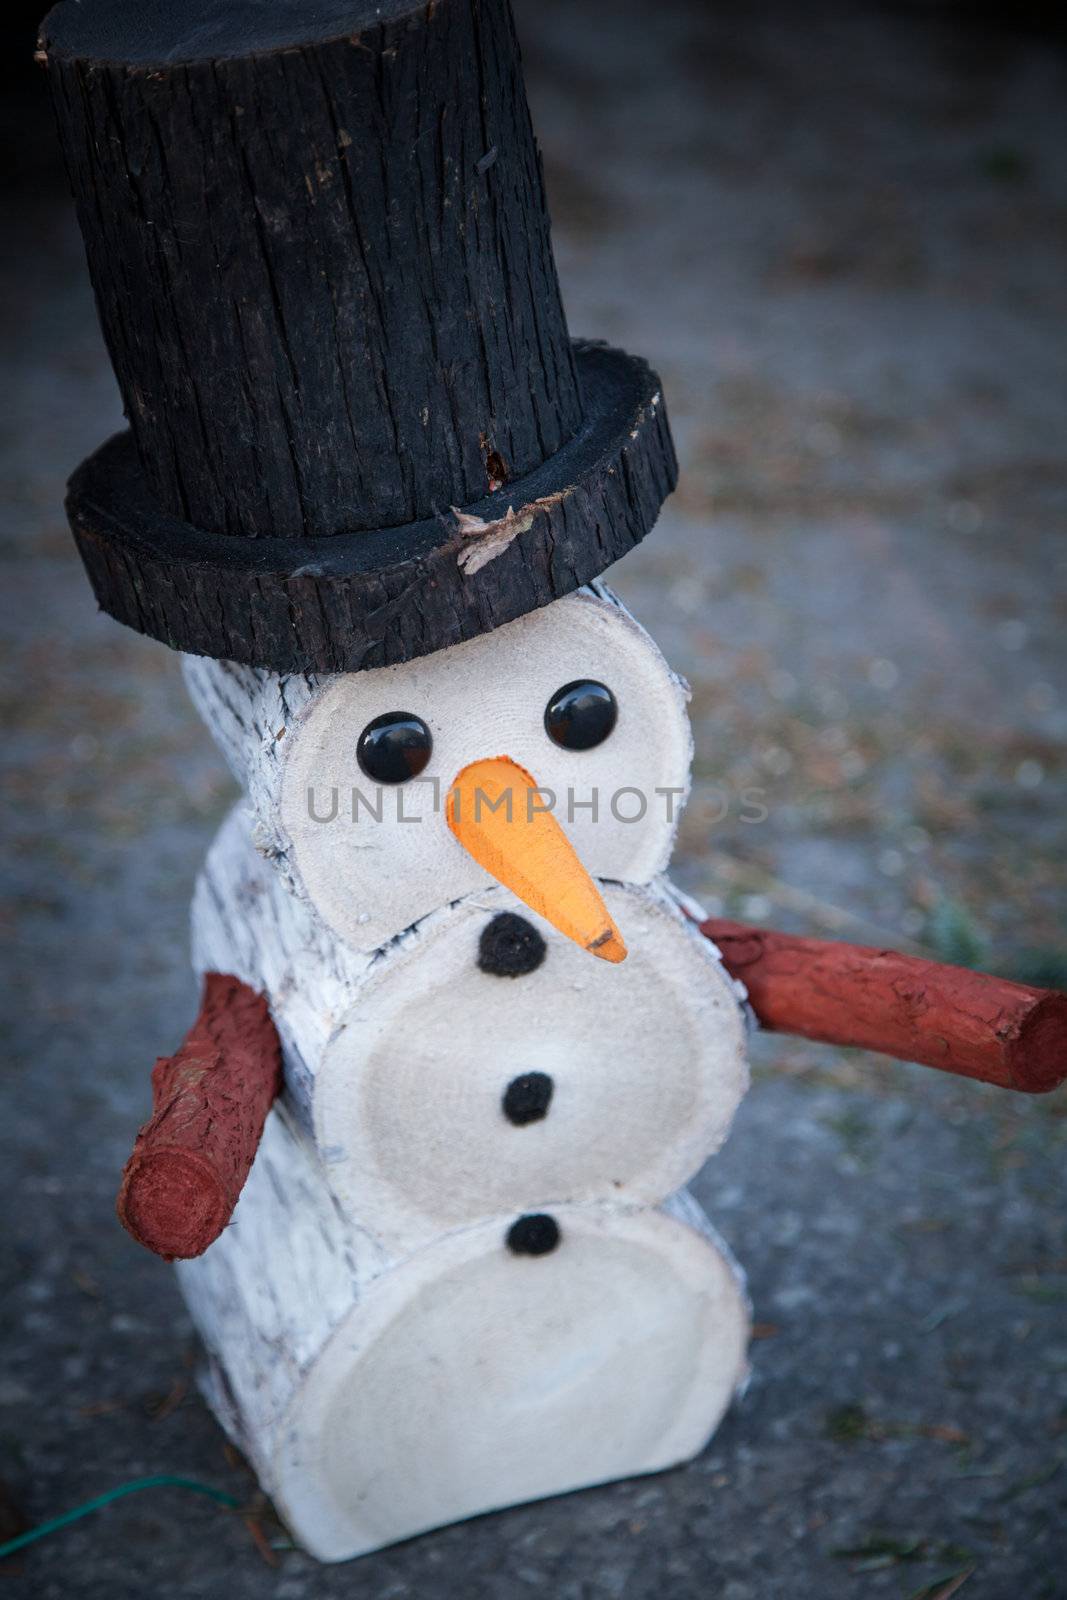 Decorative wooden snowman